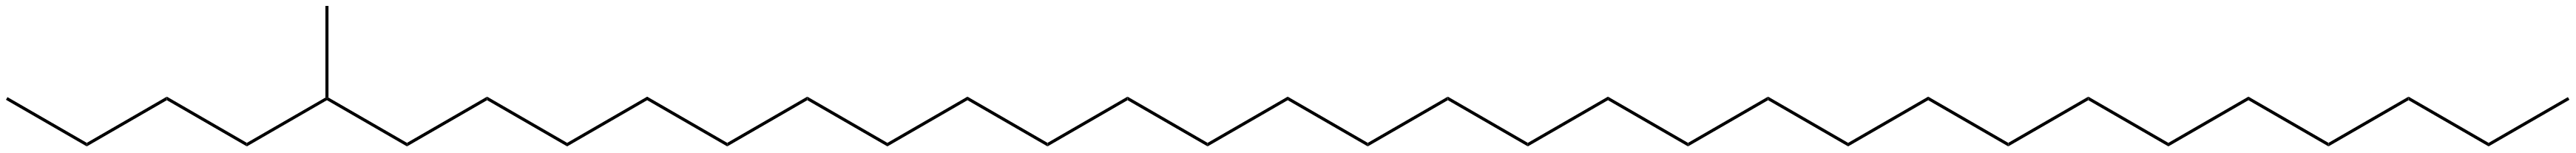 Image of 5-methyltritriacontane